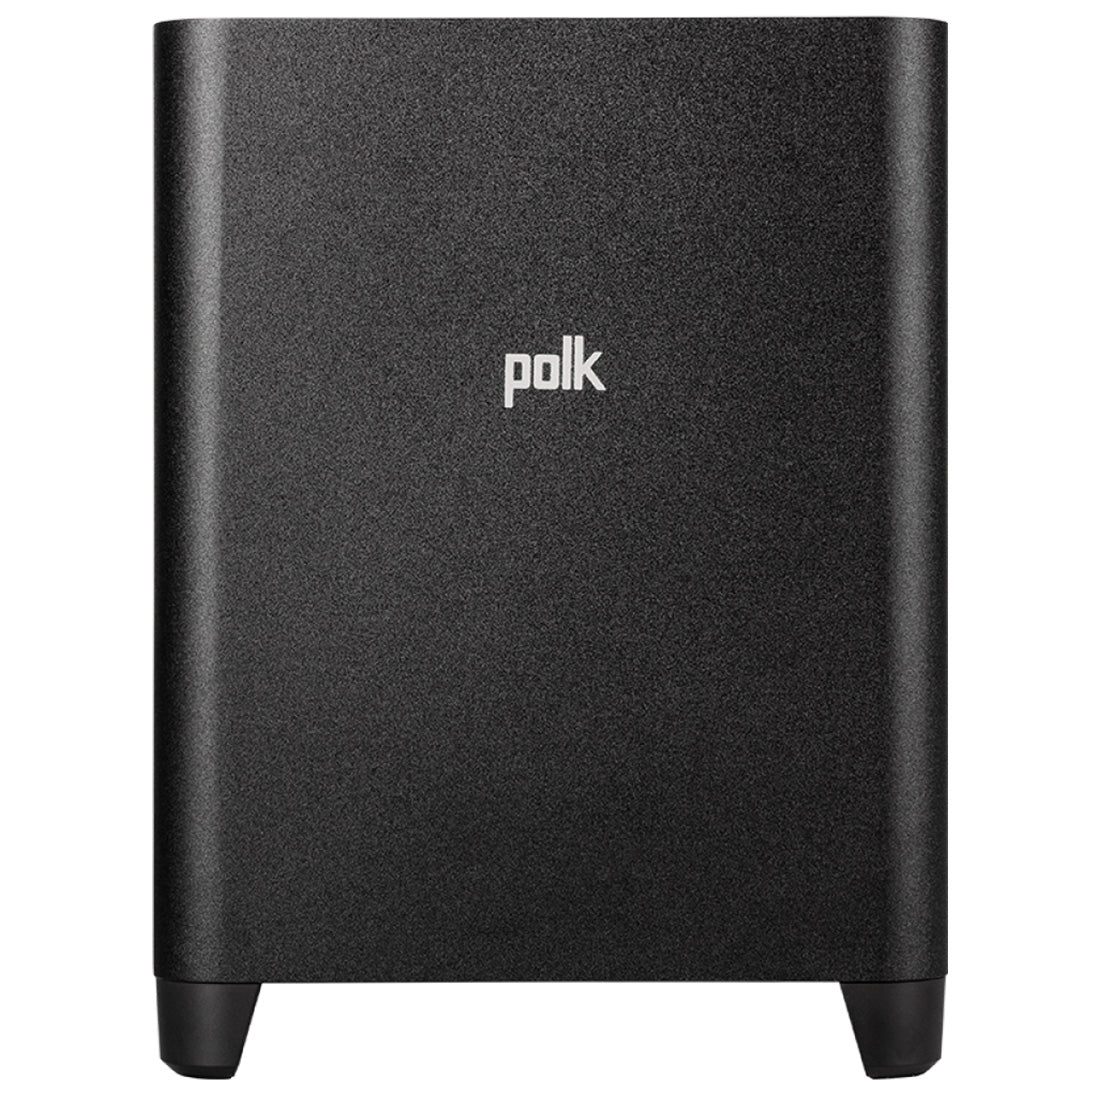 Polk Audio Magnifi Max AX 5.1.2 Sound Bar with 10" Wireless Subwoofer